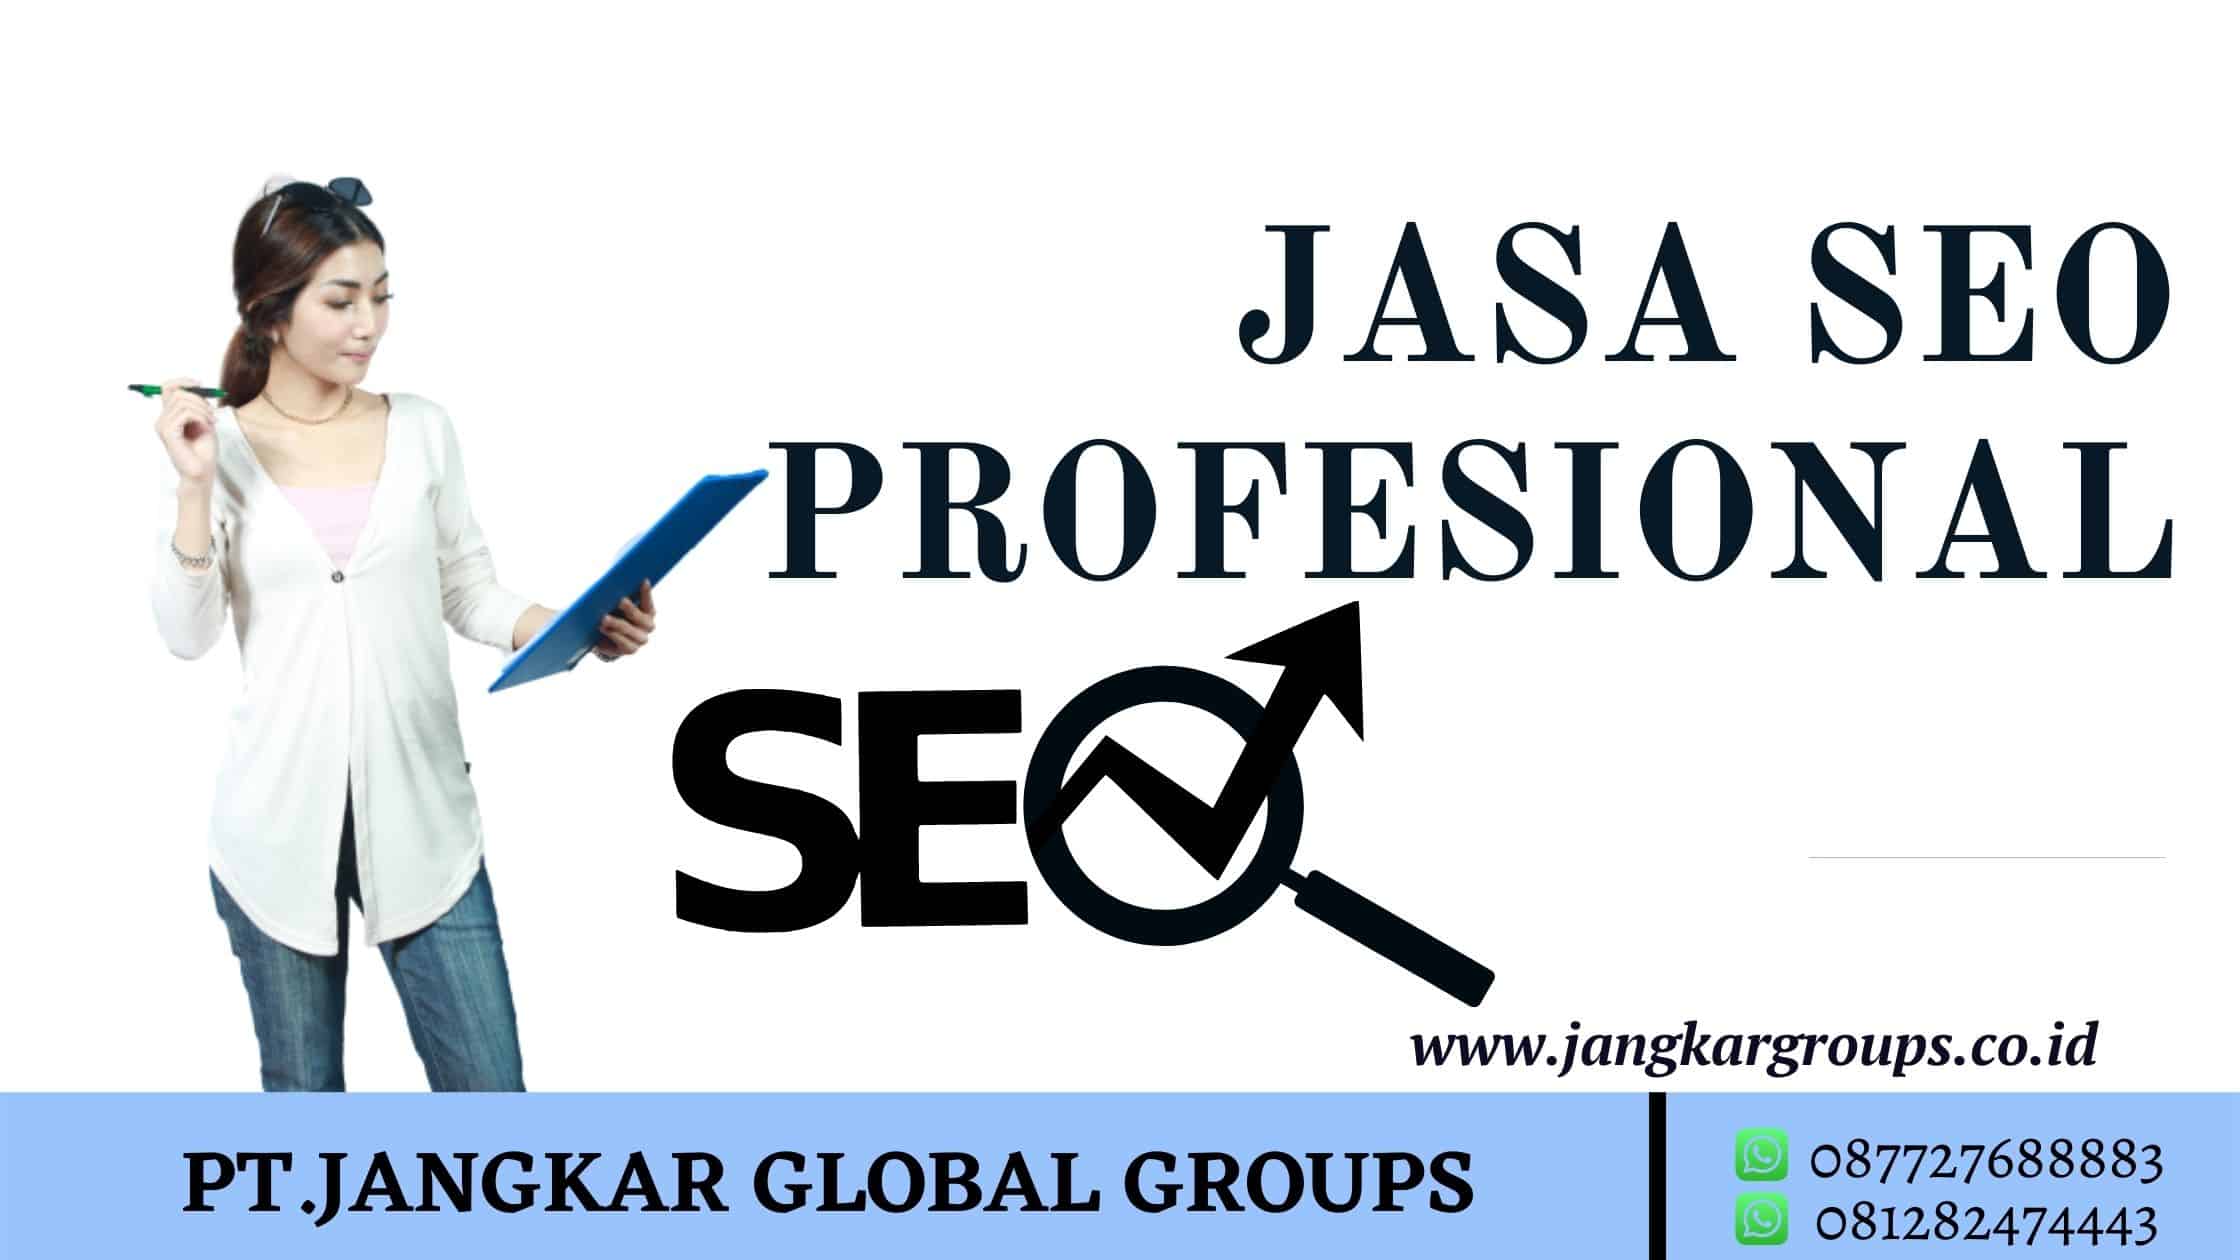 Jasa SEO Profesional, Jasa Desain dan SEO Website/Toko Online